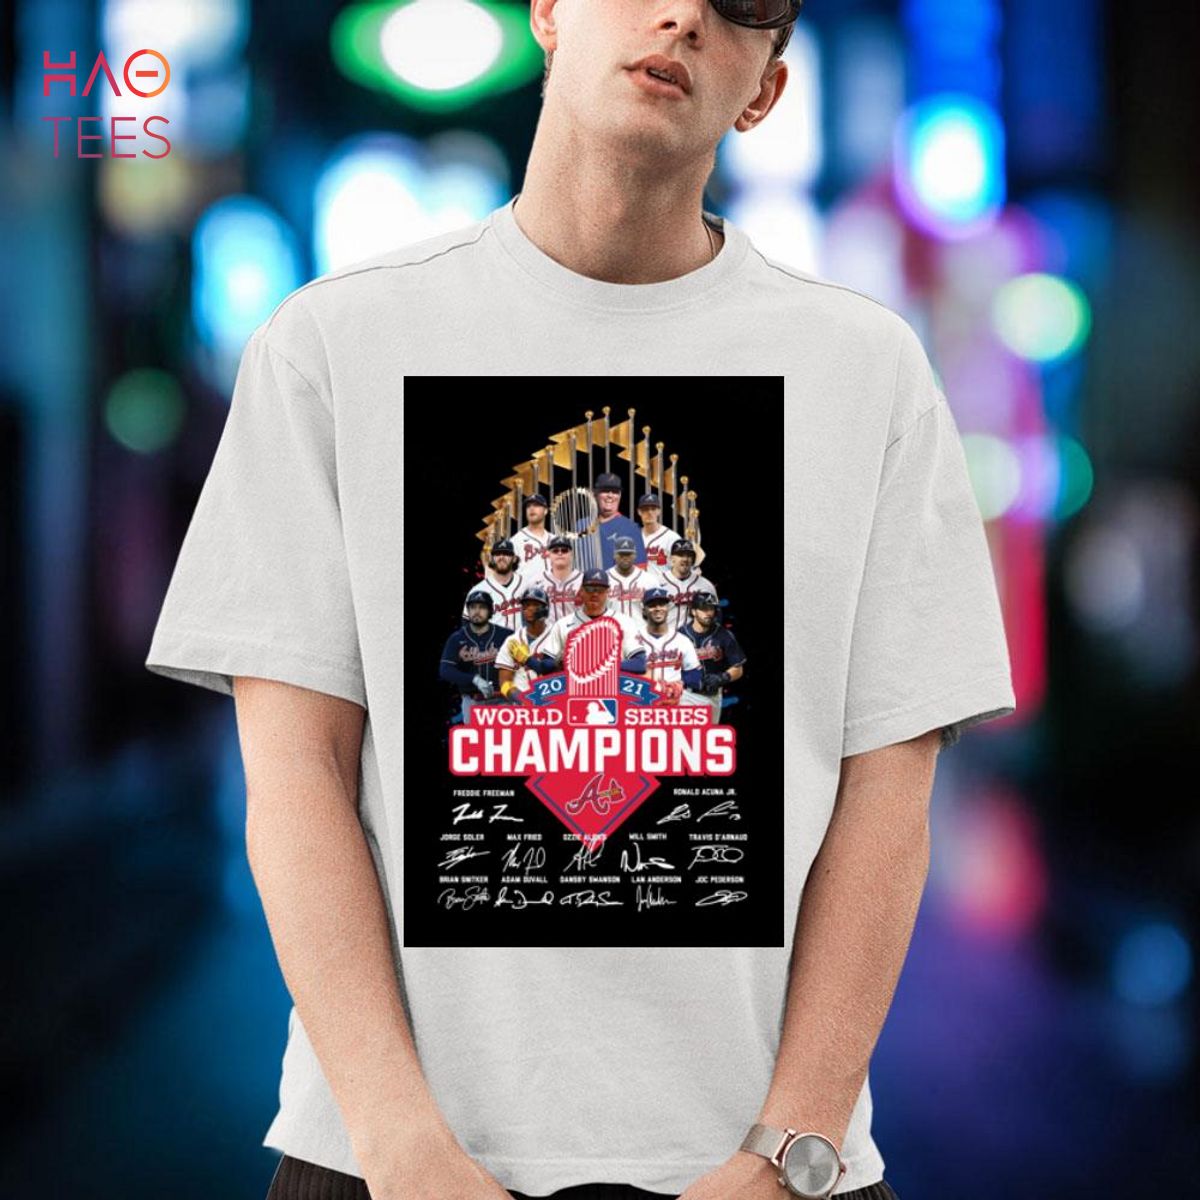 braves champion t shirt